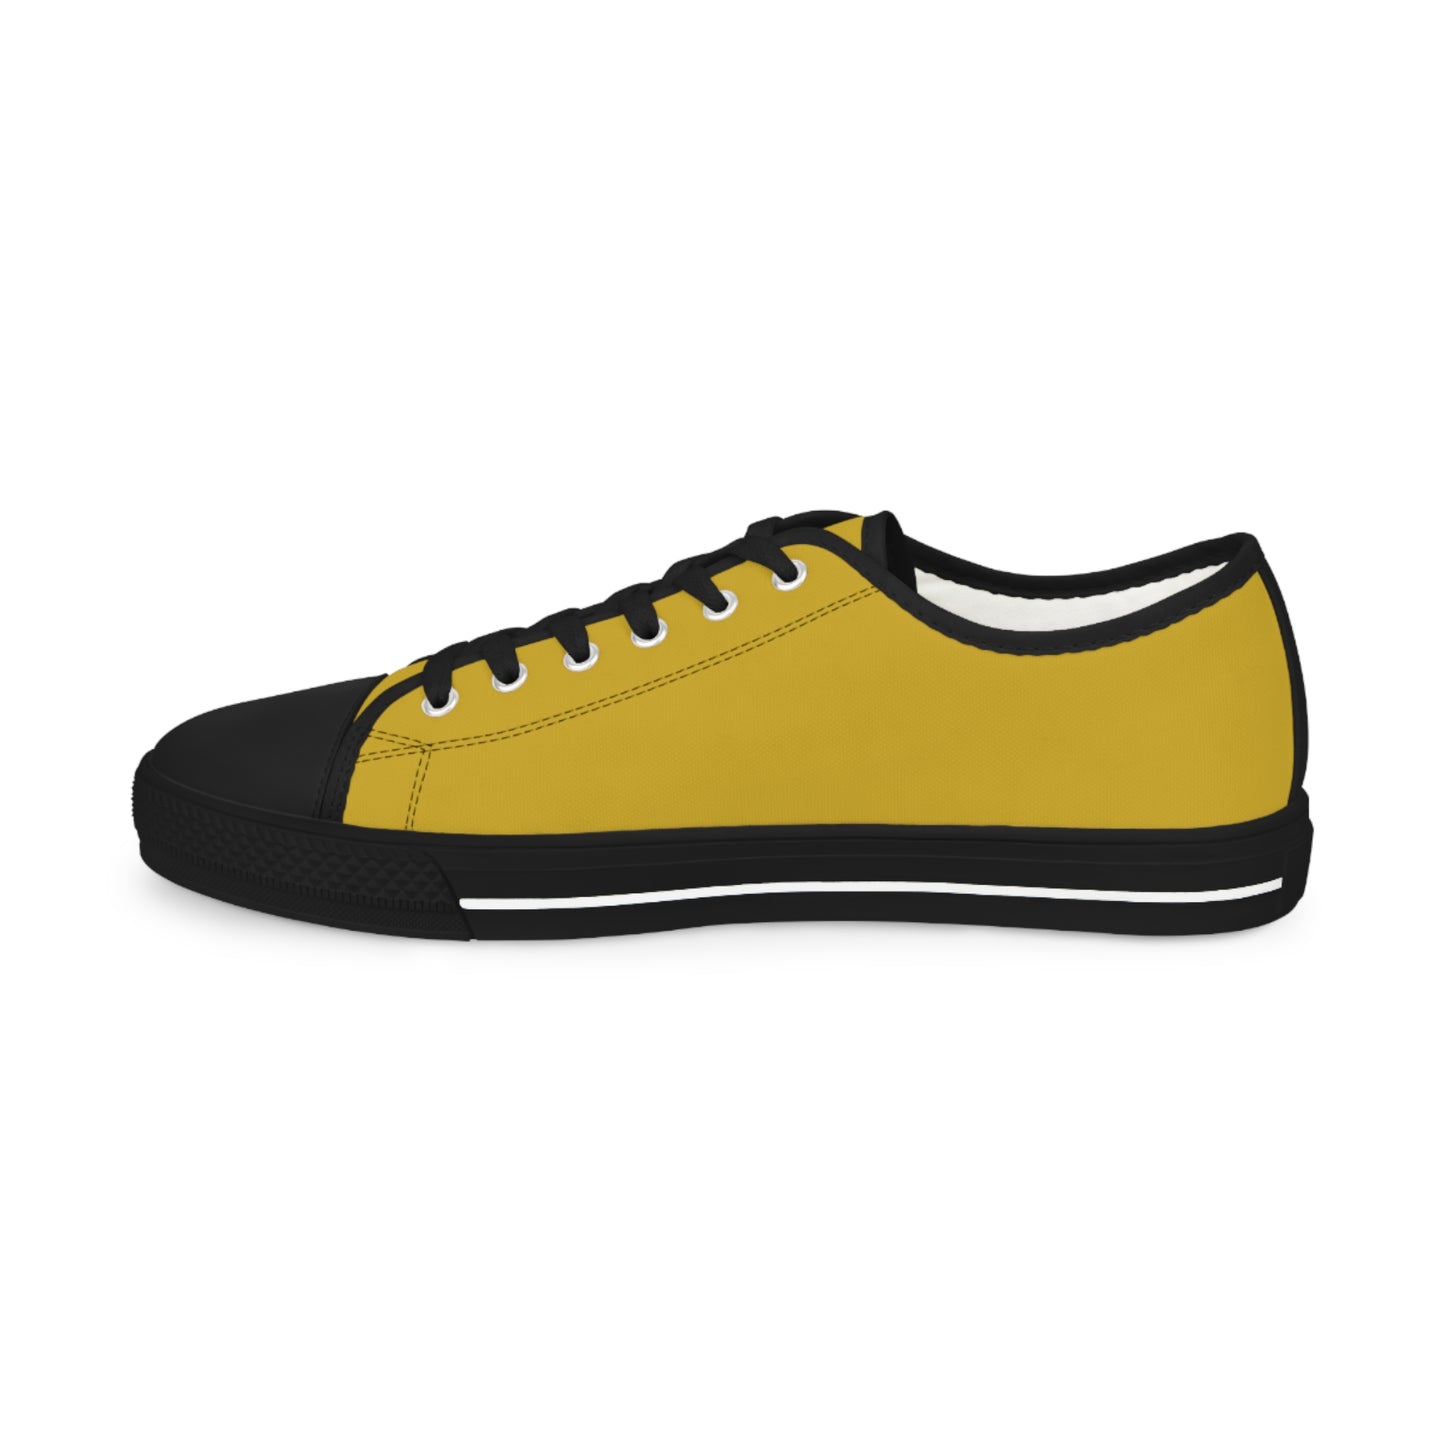 Men's Low Top Sneakers - Gold US 14 Black sole